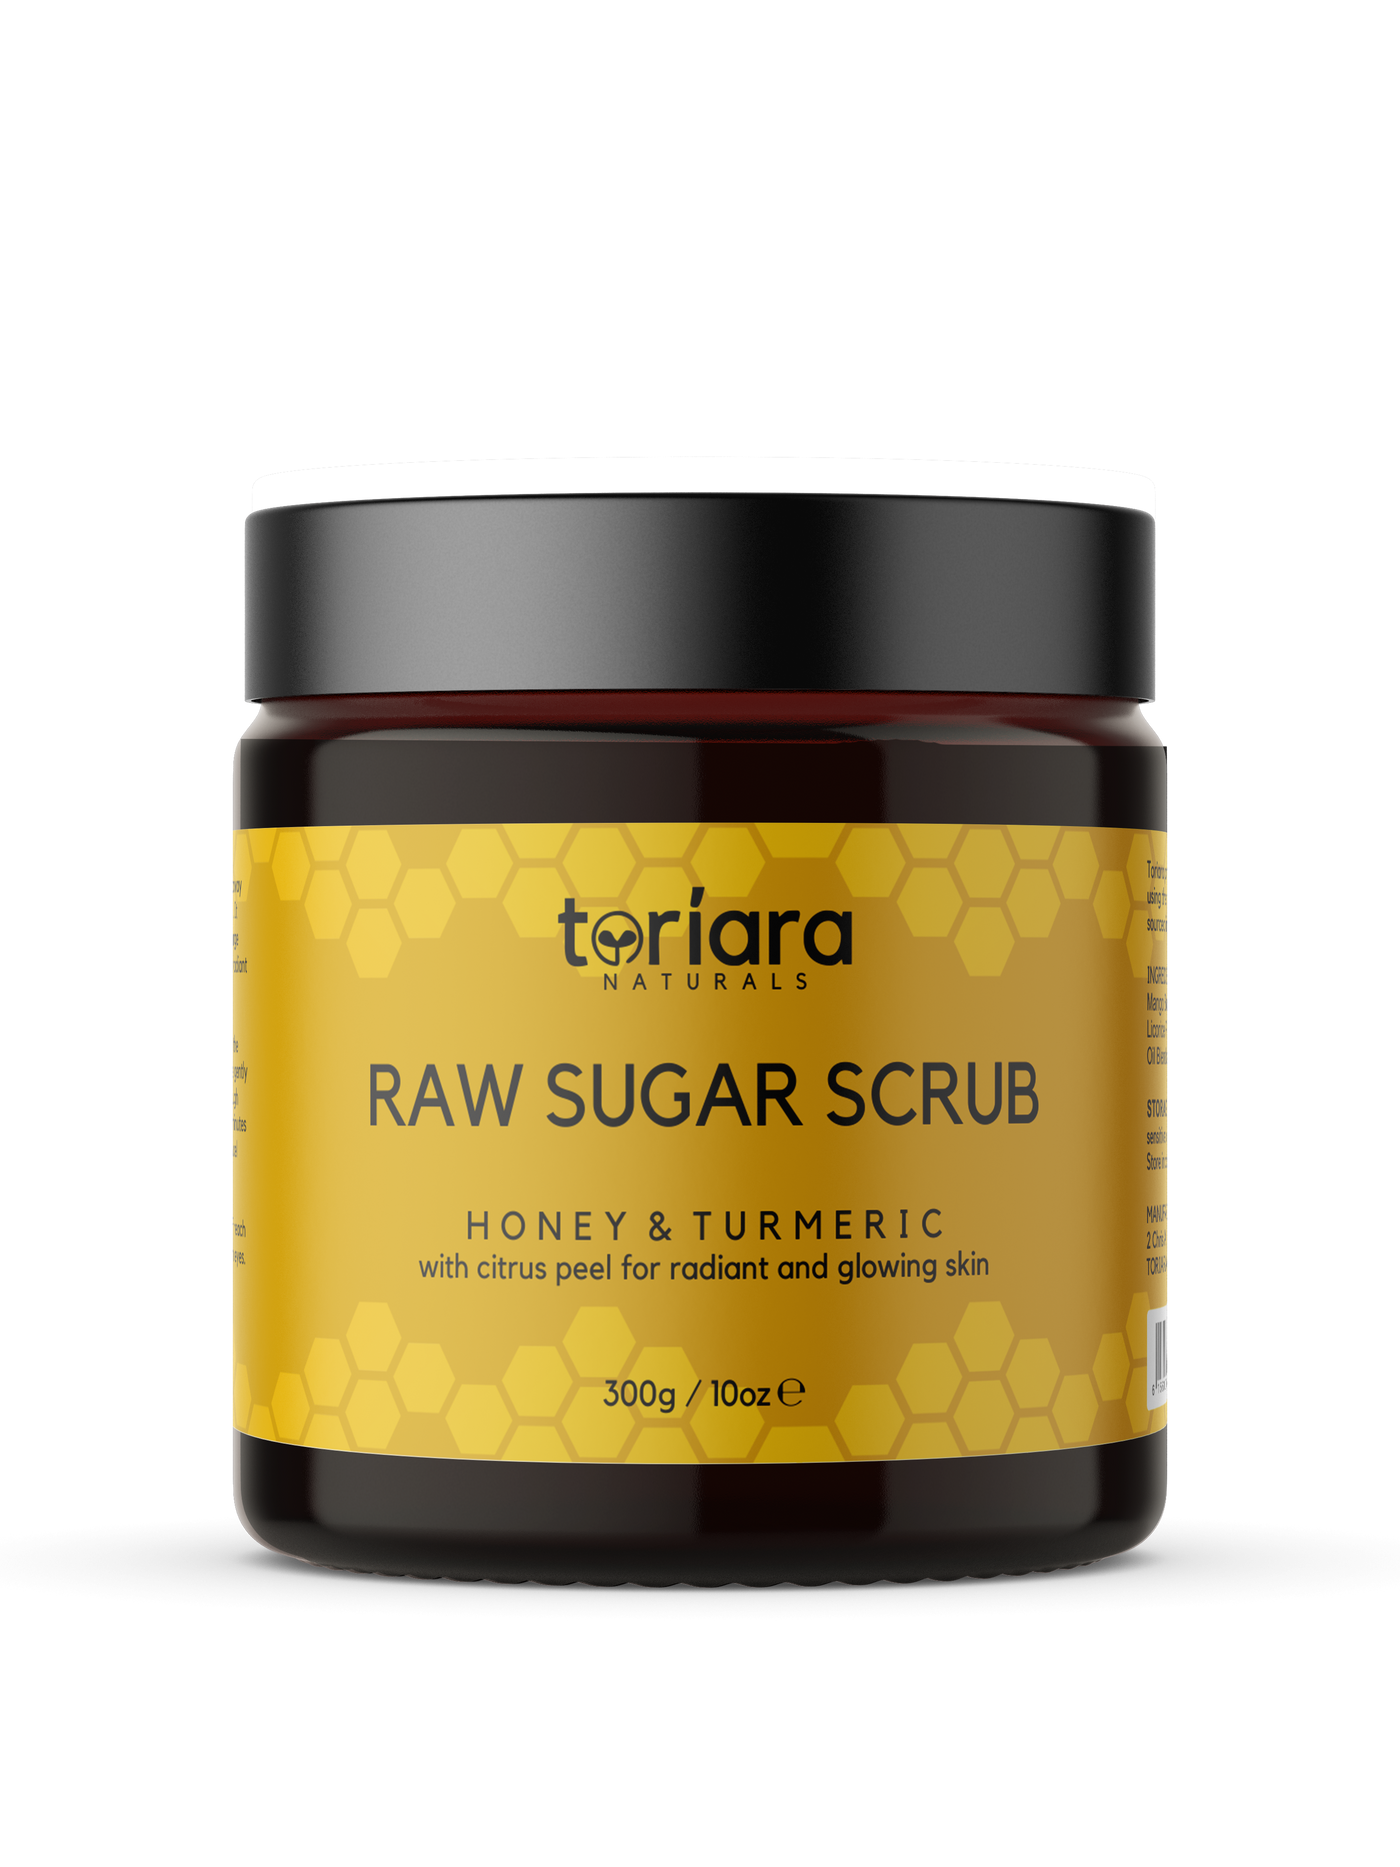 Raw Sugar Scrub - Honey & Turmeric